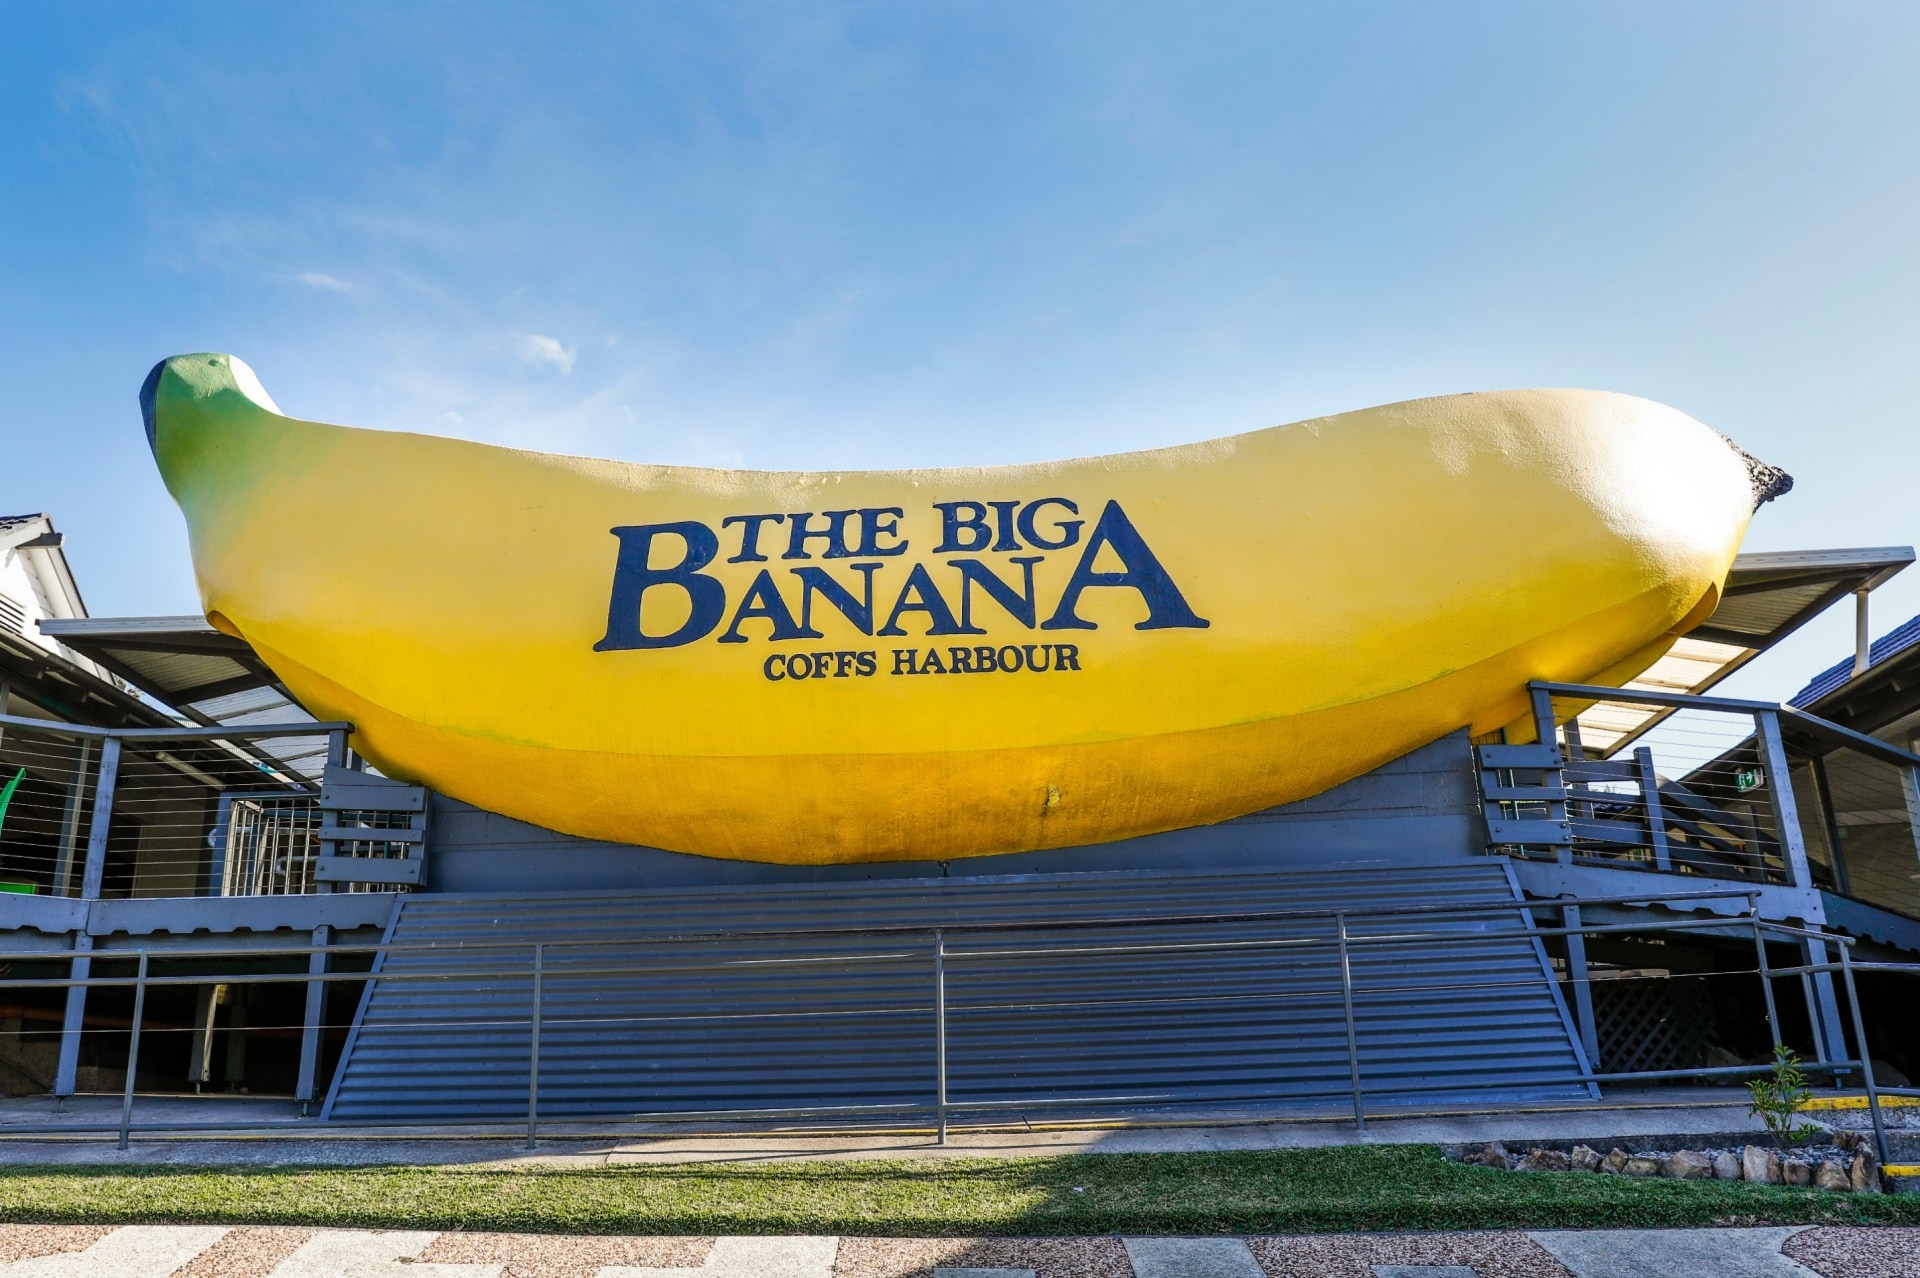 Big Banana, Coffs Harbour, New South Wales © Destination NSW